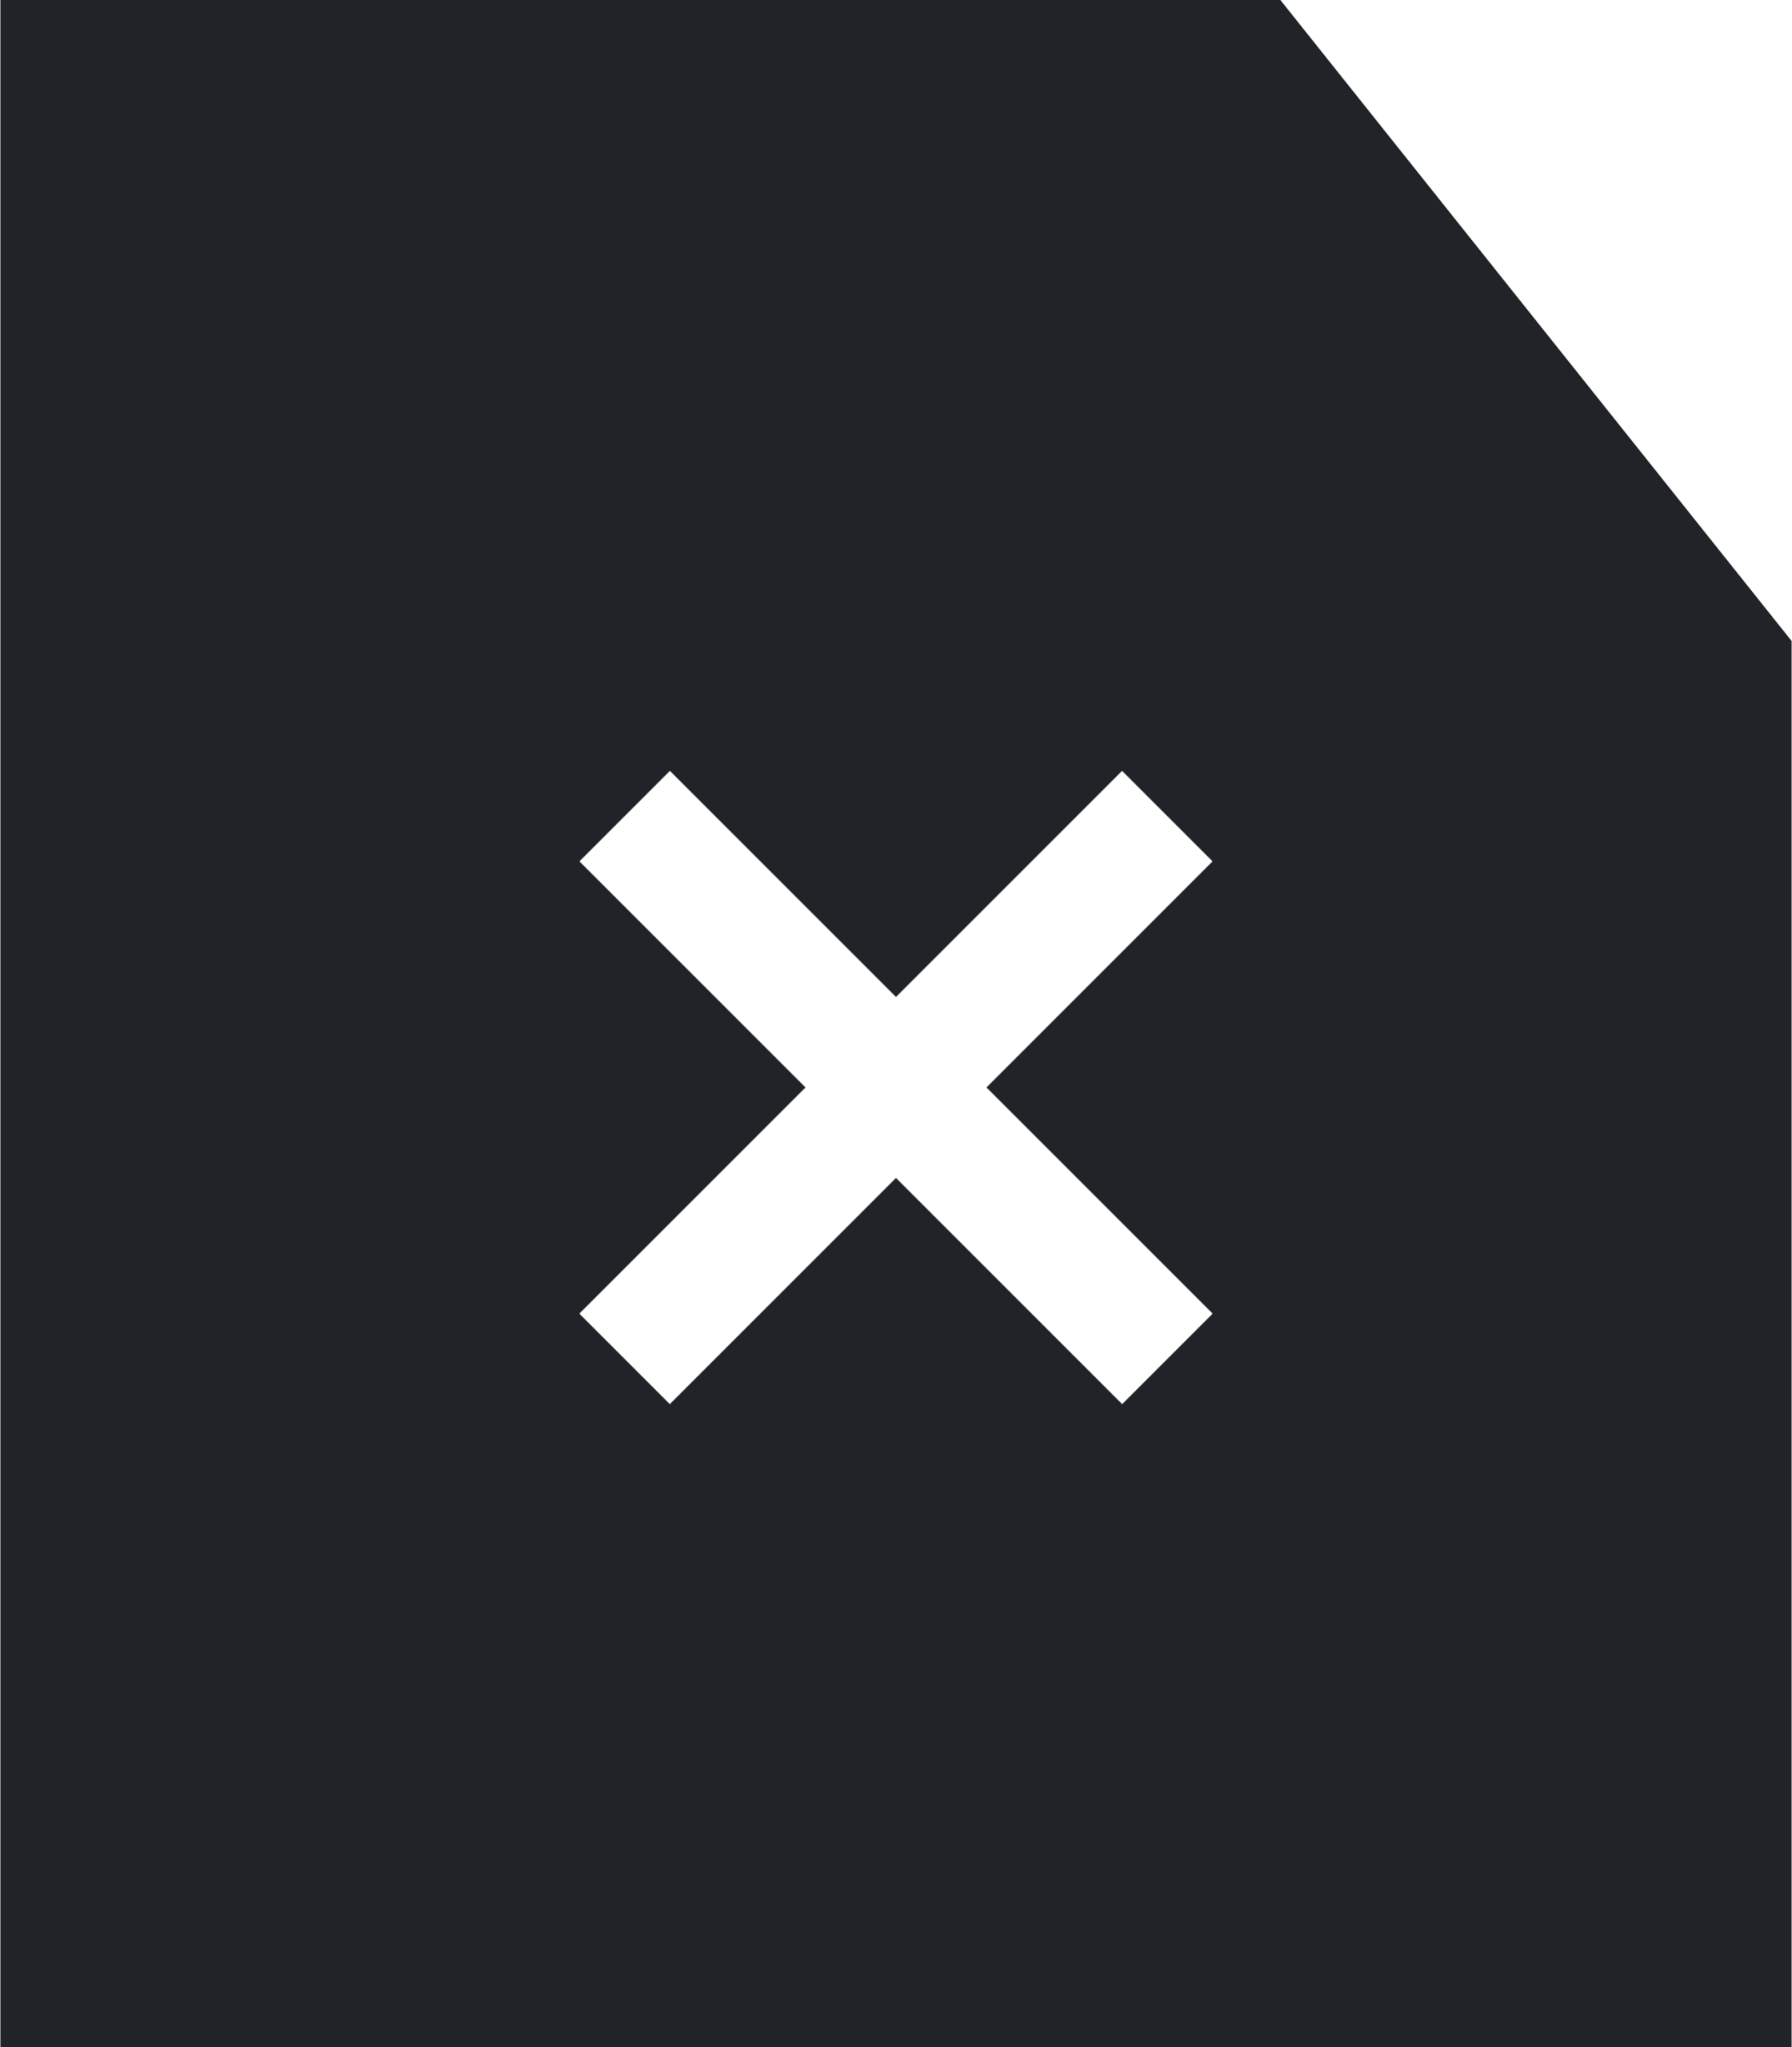 closefile (sharp filled) icon